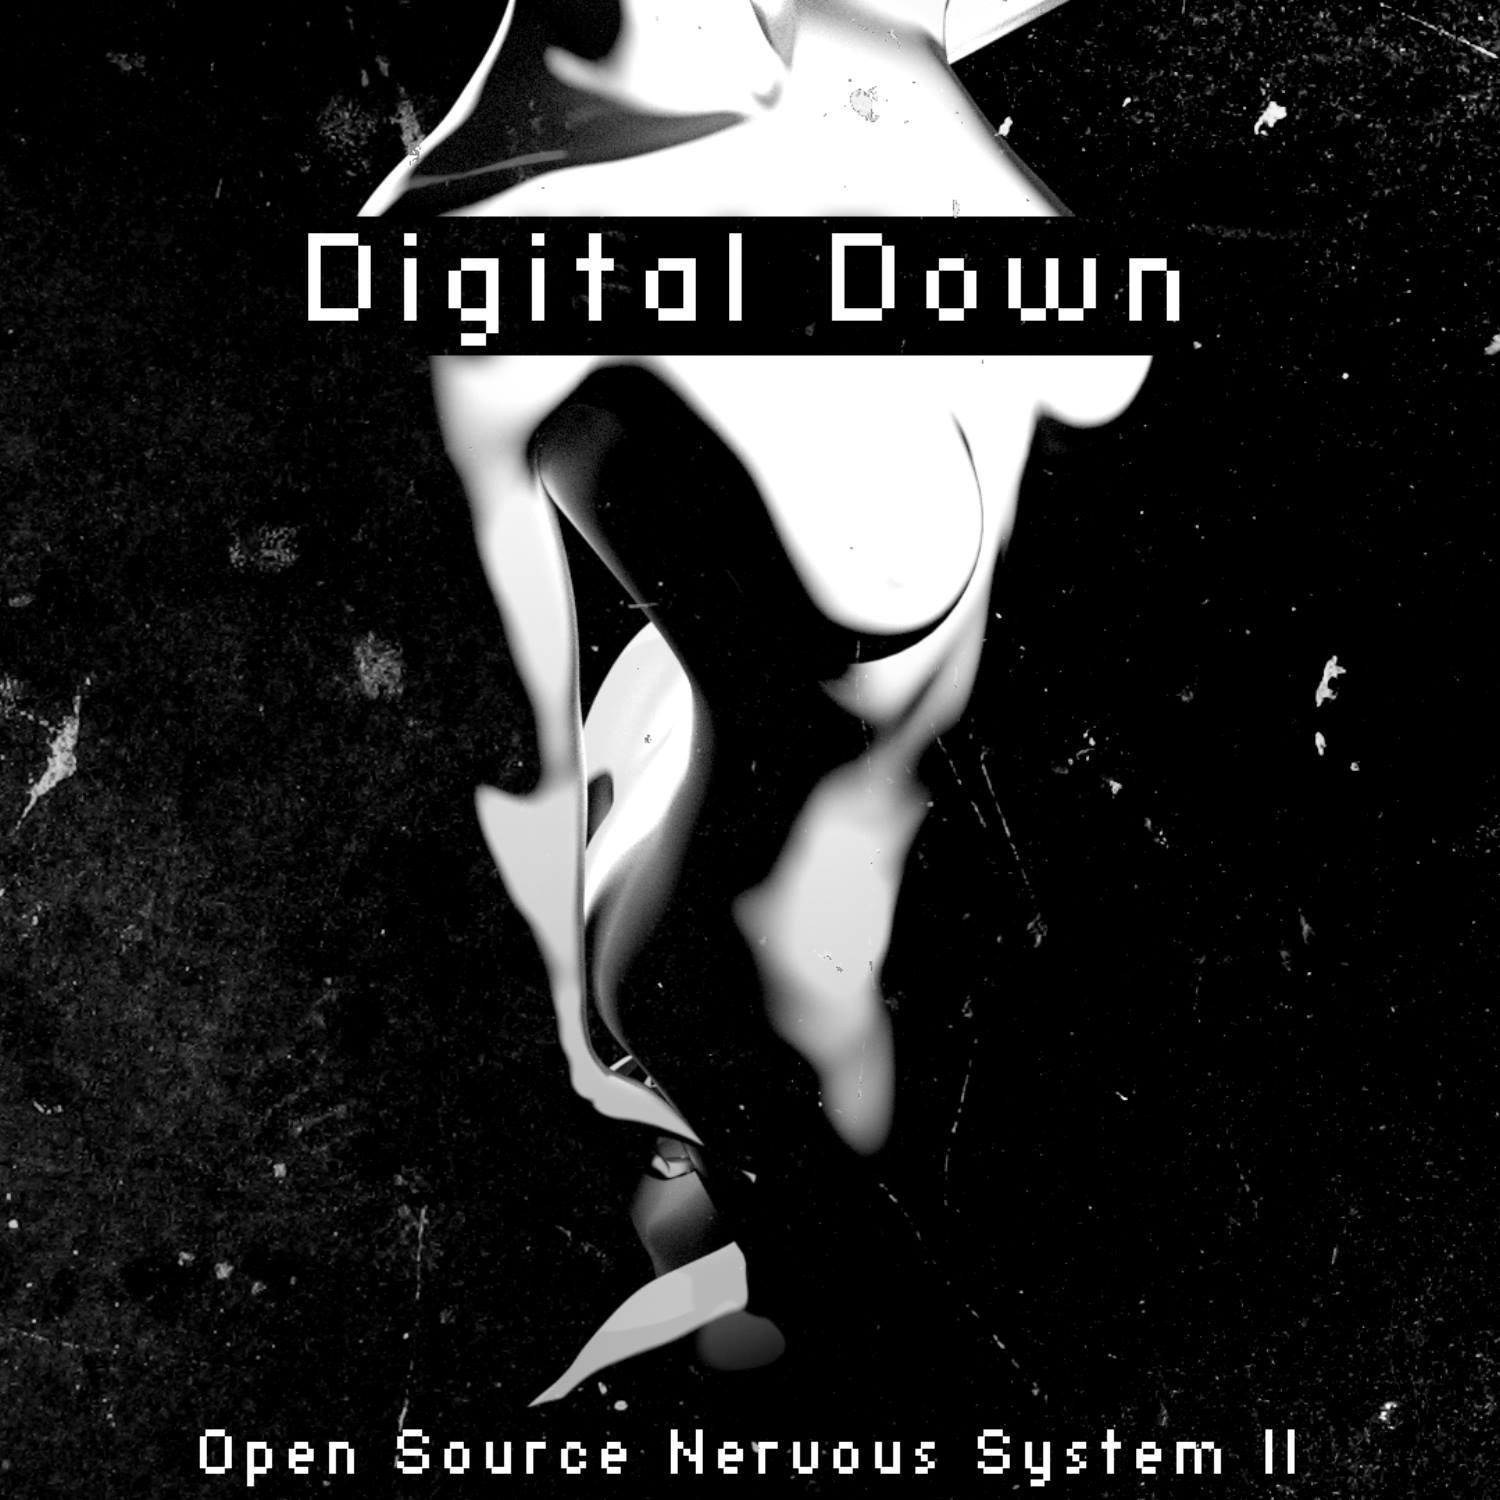 Digital Down